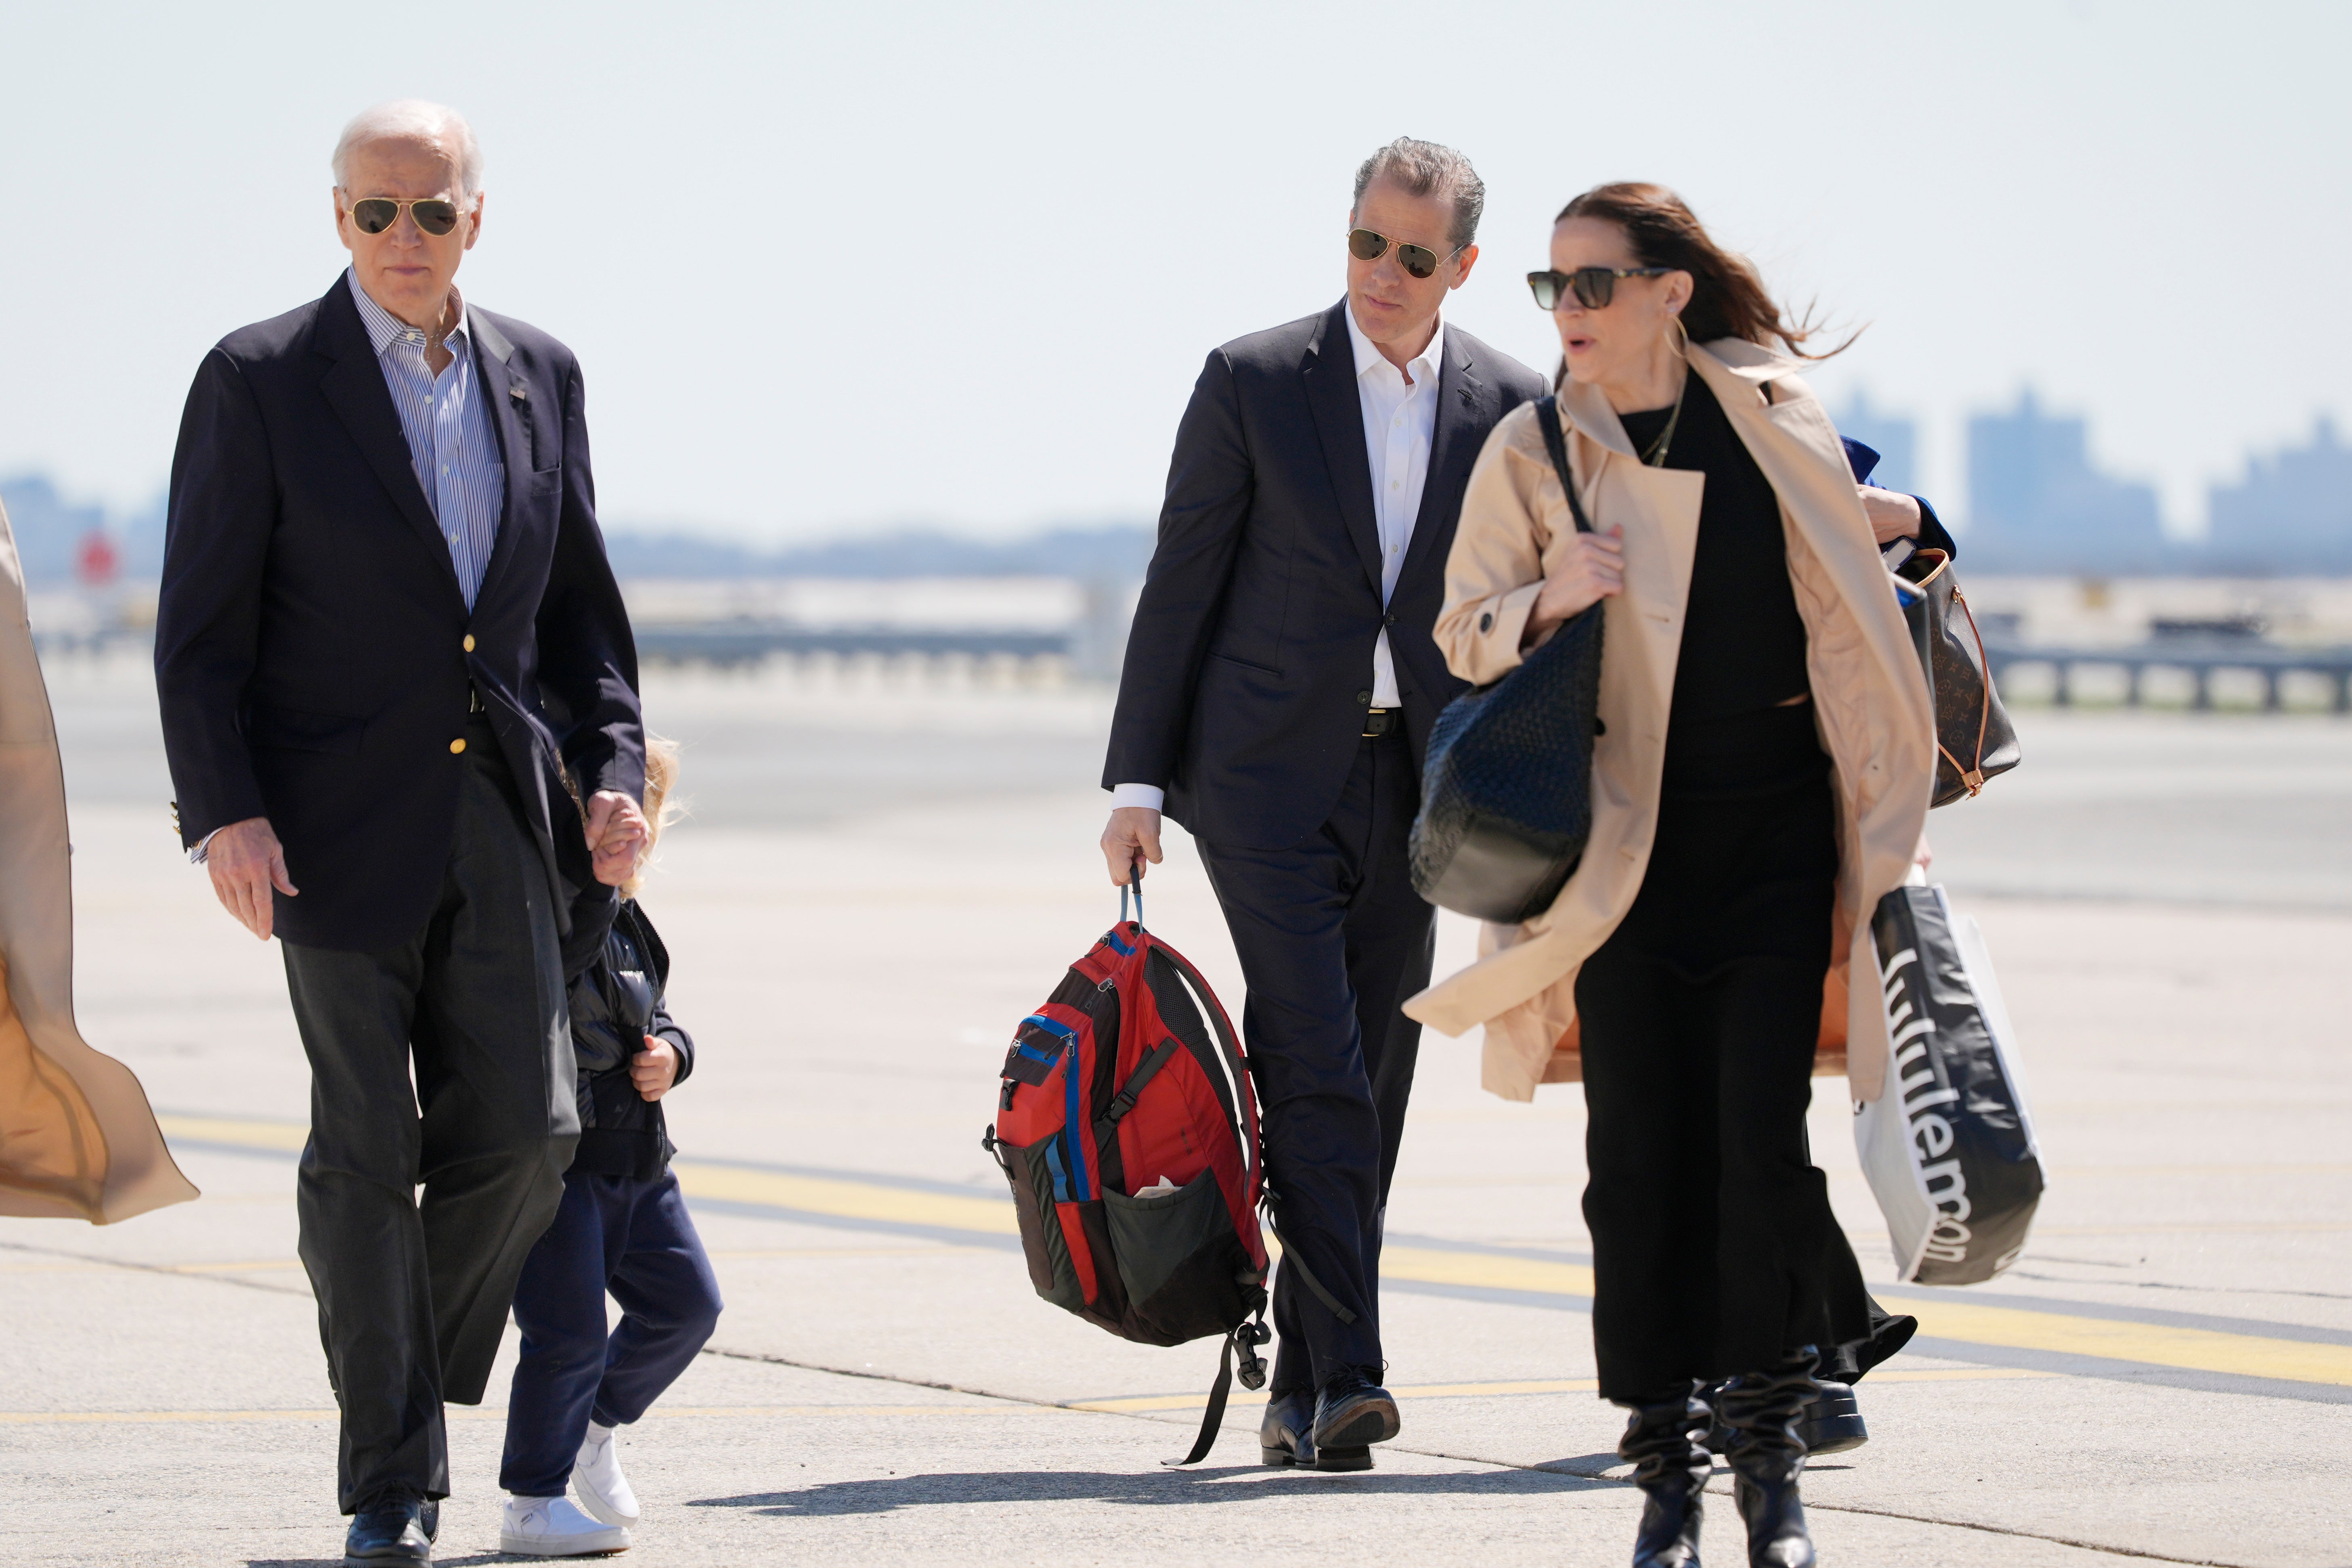 President Joe Biden walks with son Hunter Biden and daughter Ashley Biden as they walk to board Air Force One